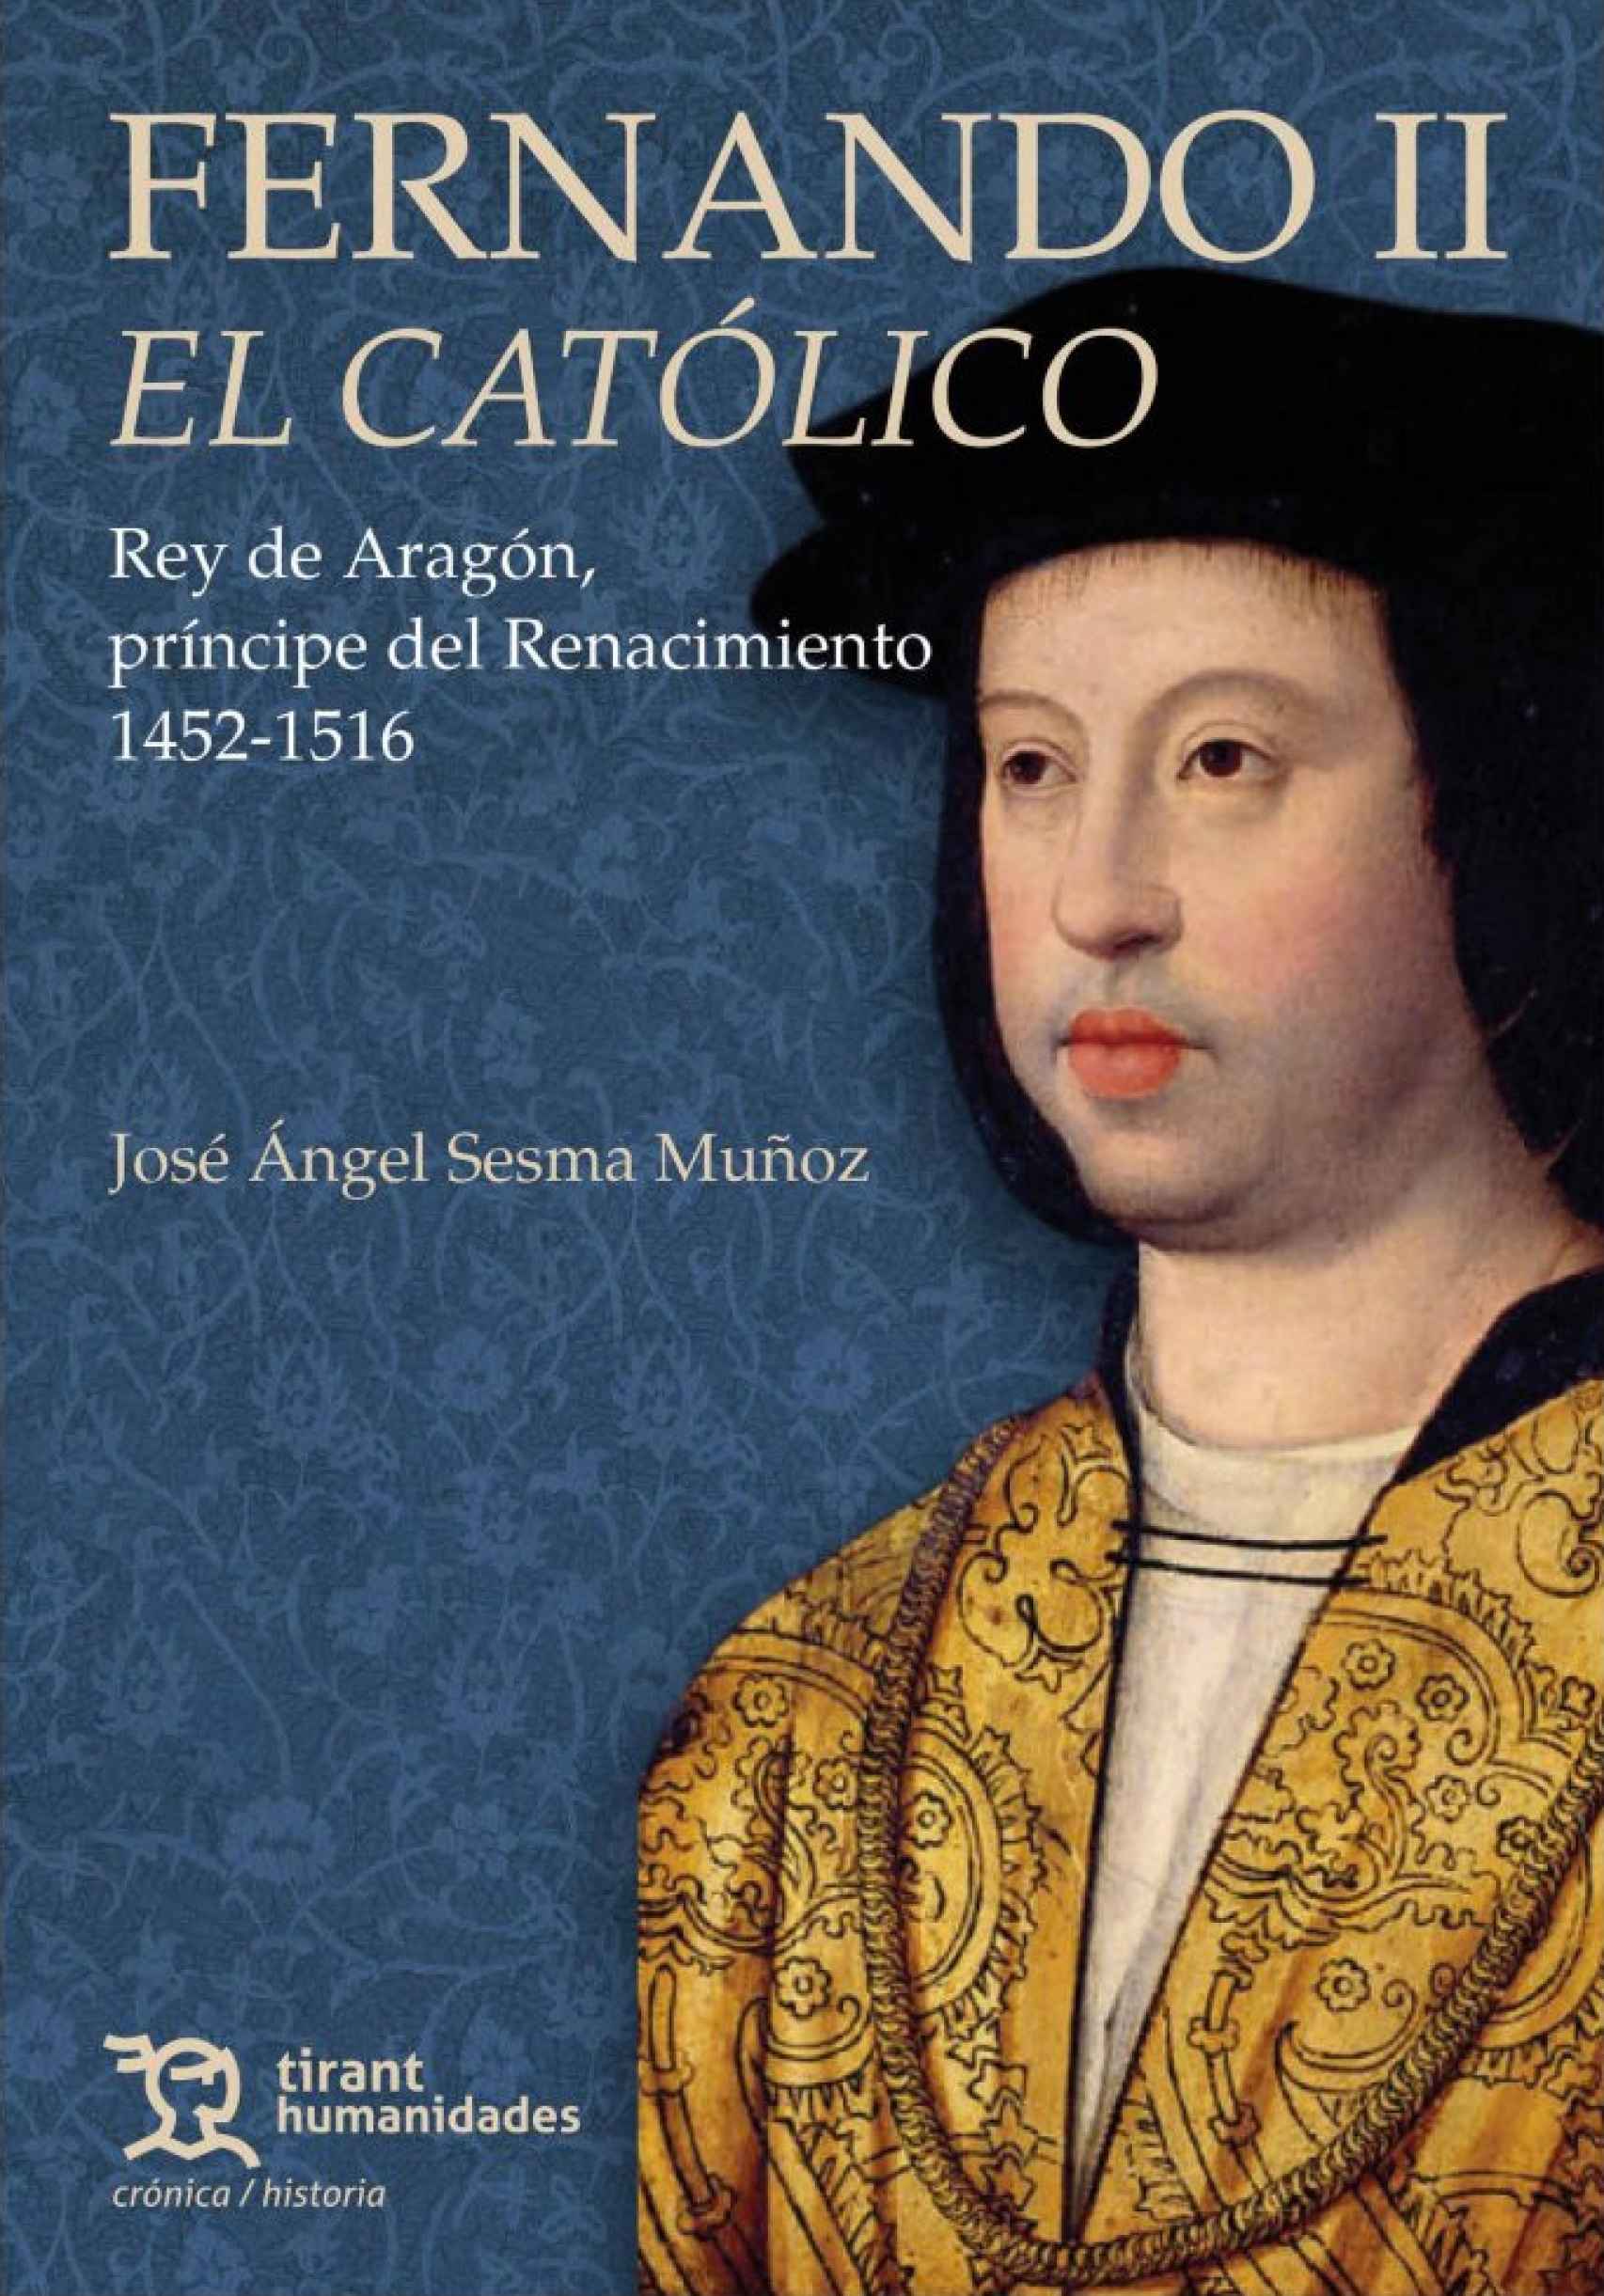 Portada de 'Fernando II el Católico'.